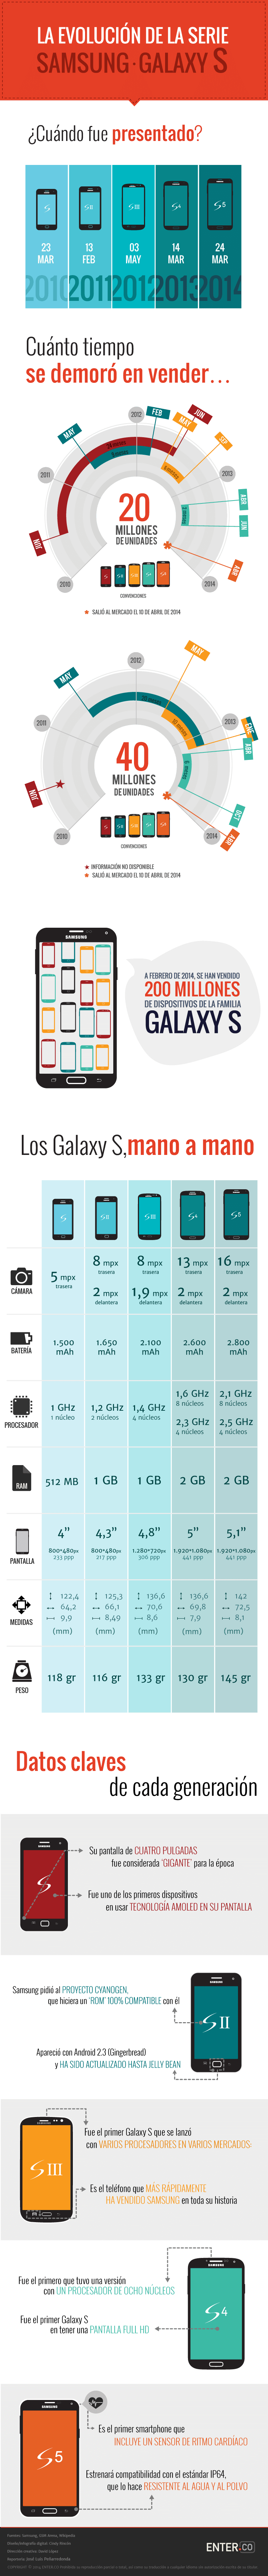 Samsung Galaxy S infografía